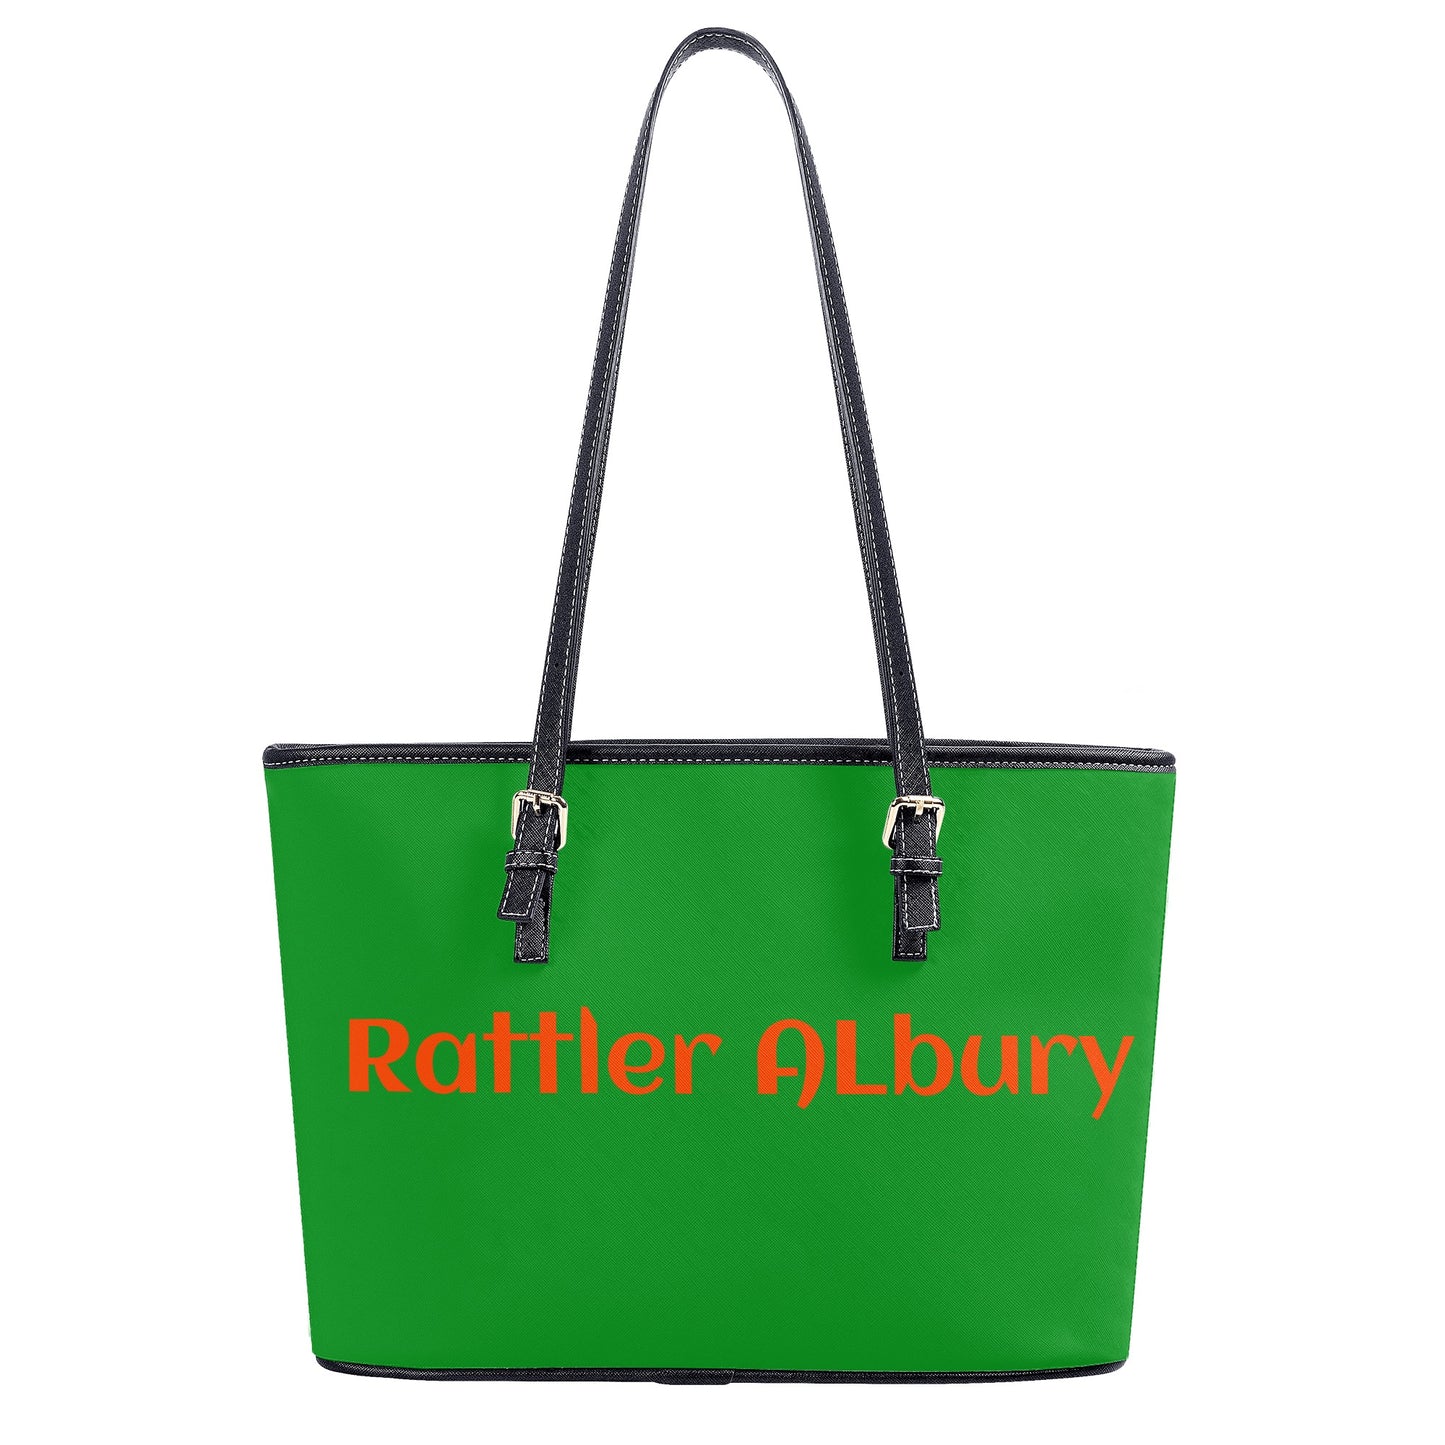 Rattler Albury Fashion PU Tote Bags